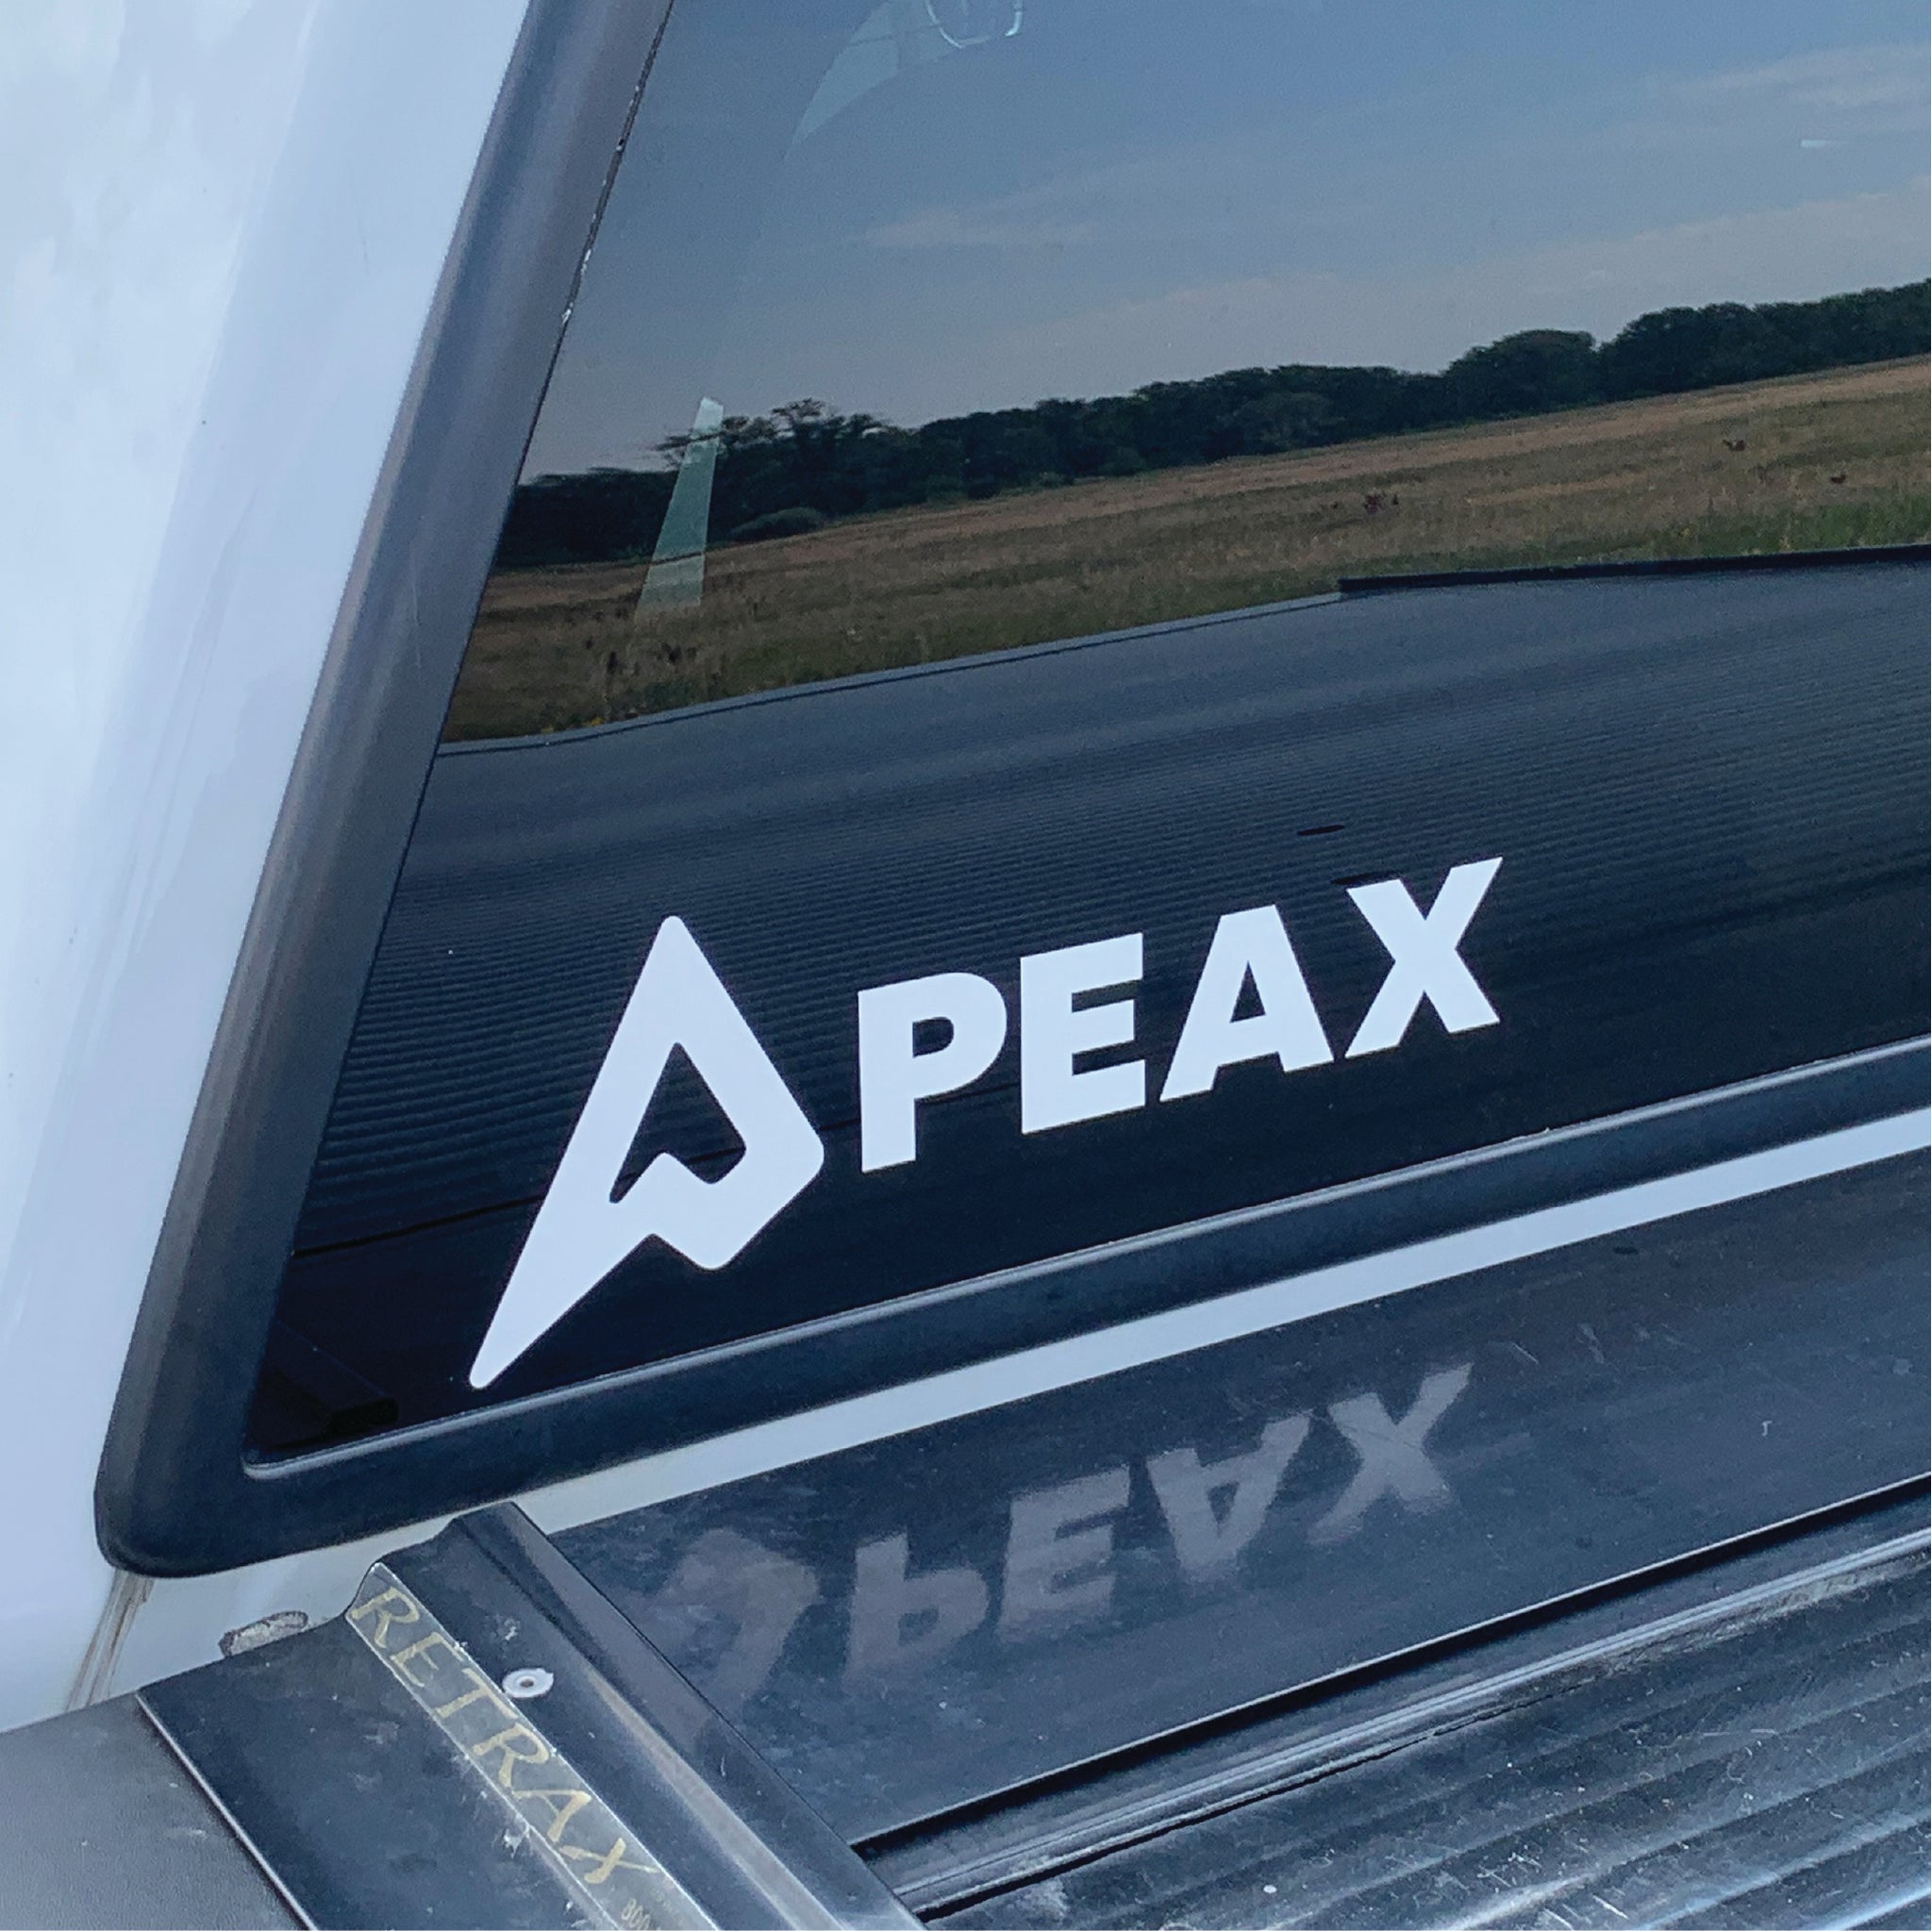 PEAX - TRANSFER DECAL STICKER (Large)